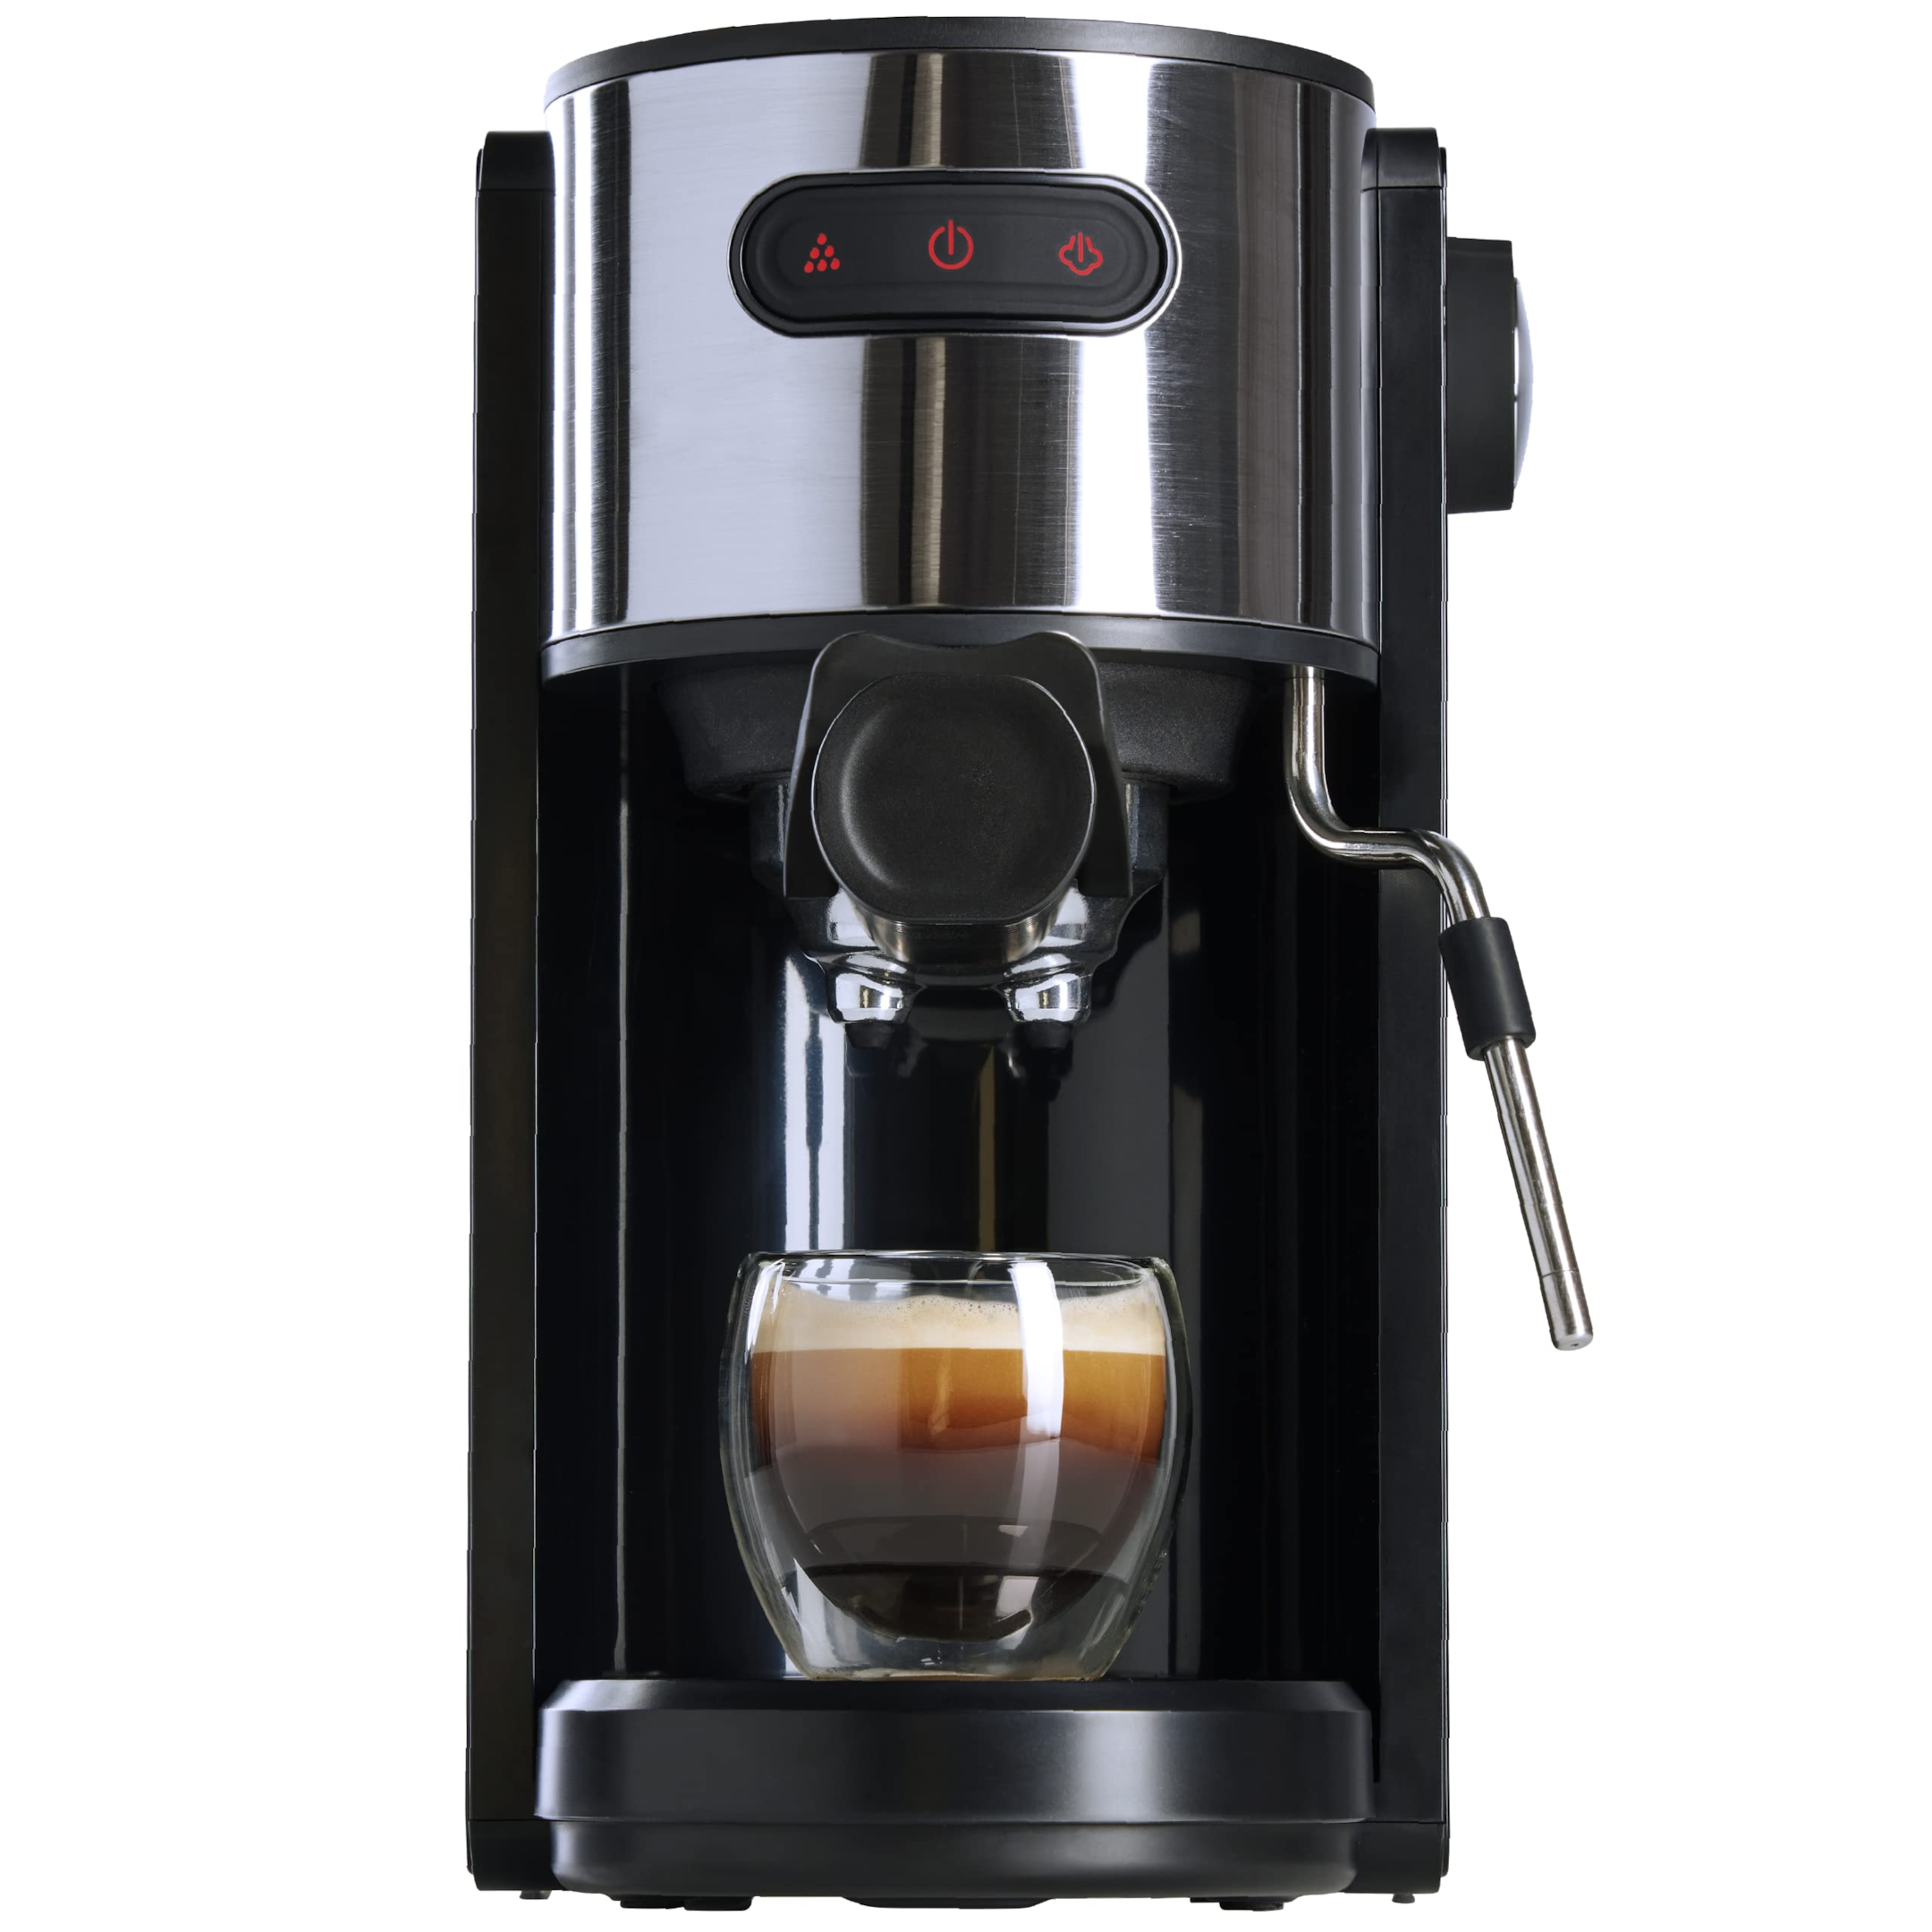 Coffee Gator Espresso Machine